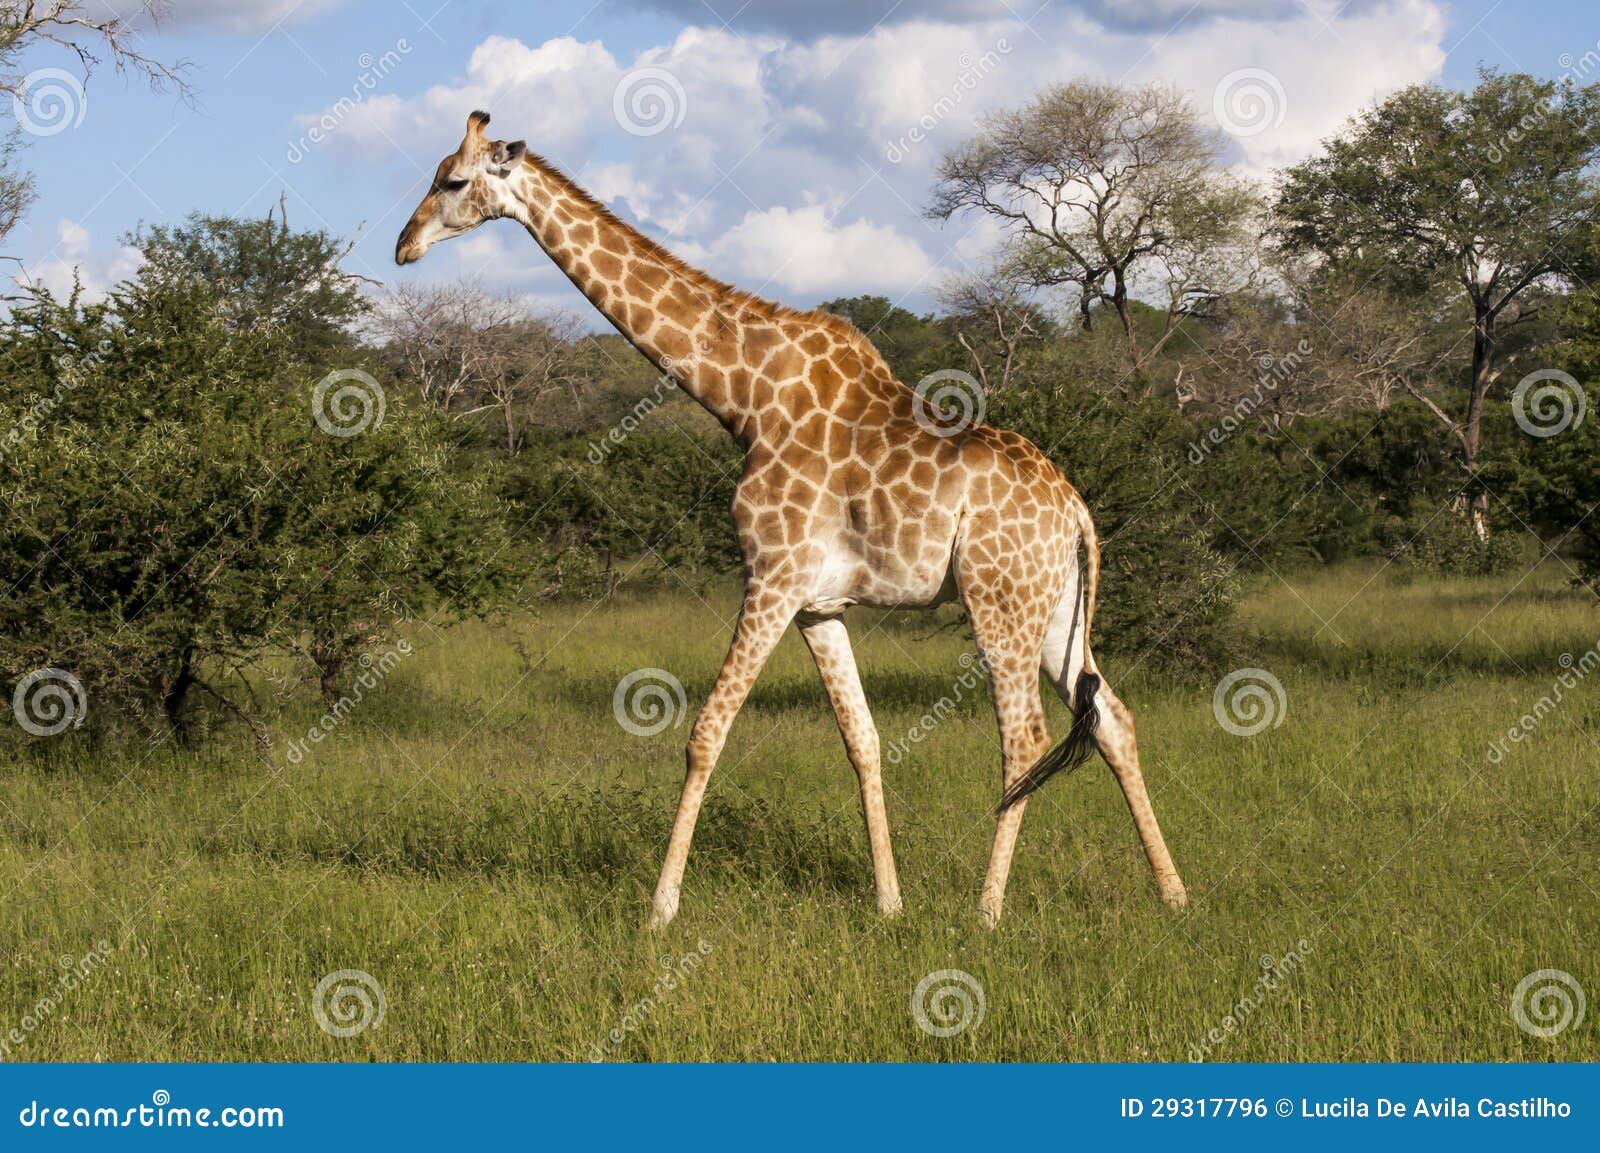 giraffe in the wilderness in africa